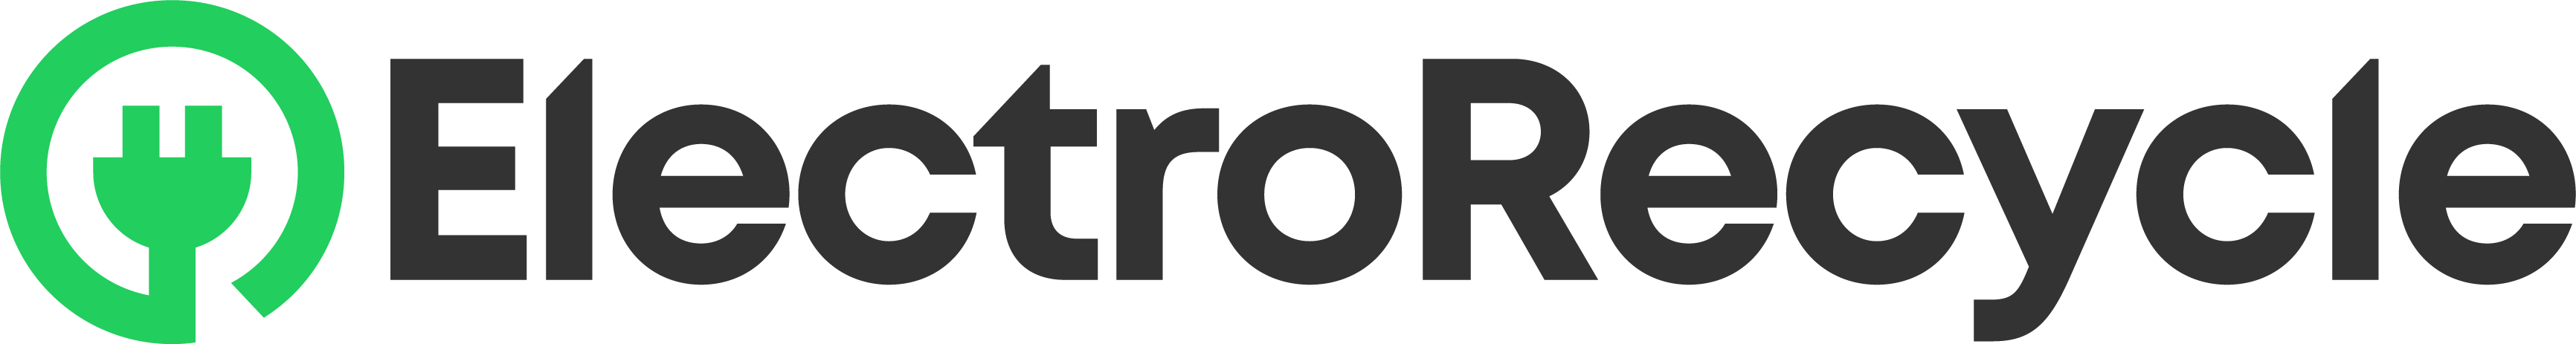 ElectroRecycle_Logo_RGB transparent